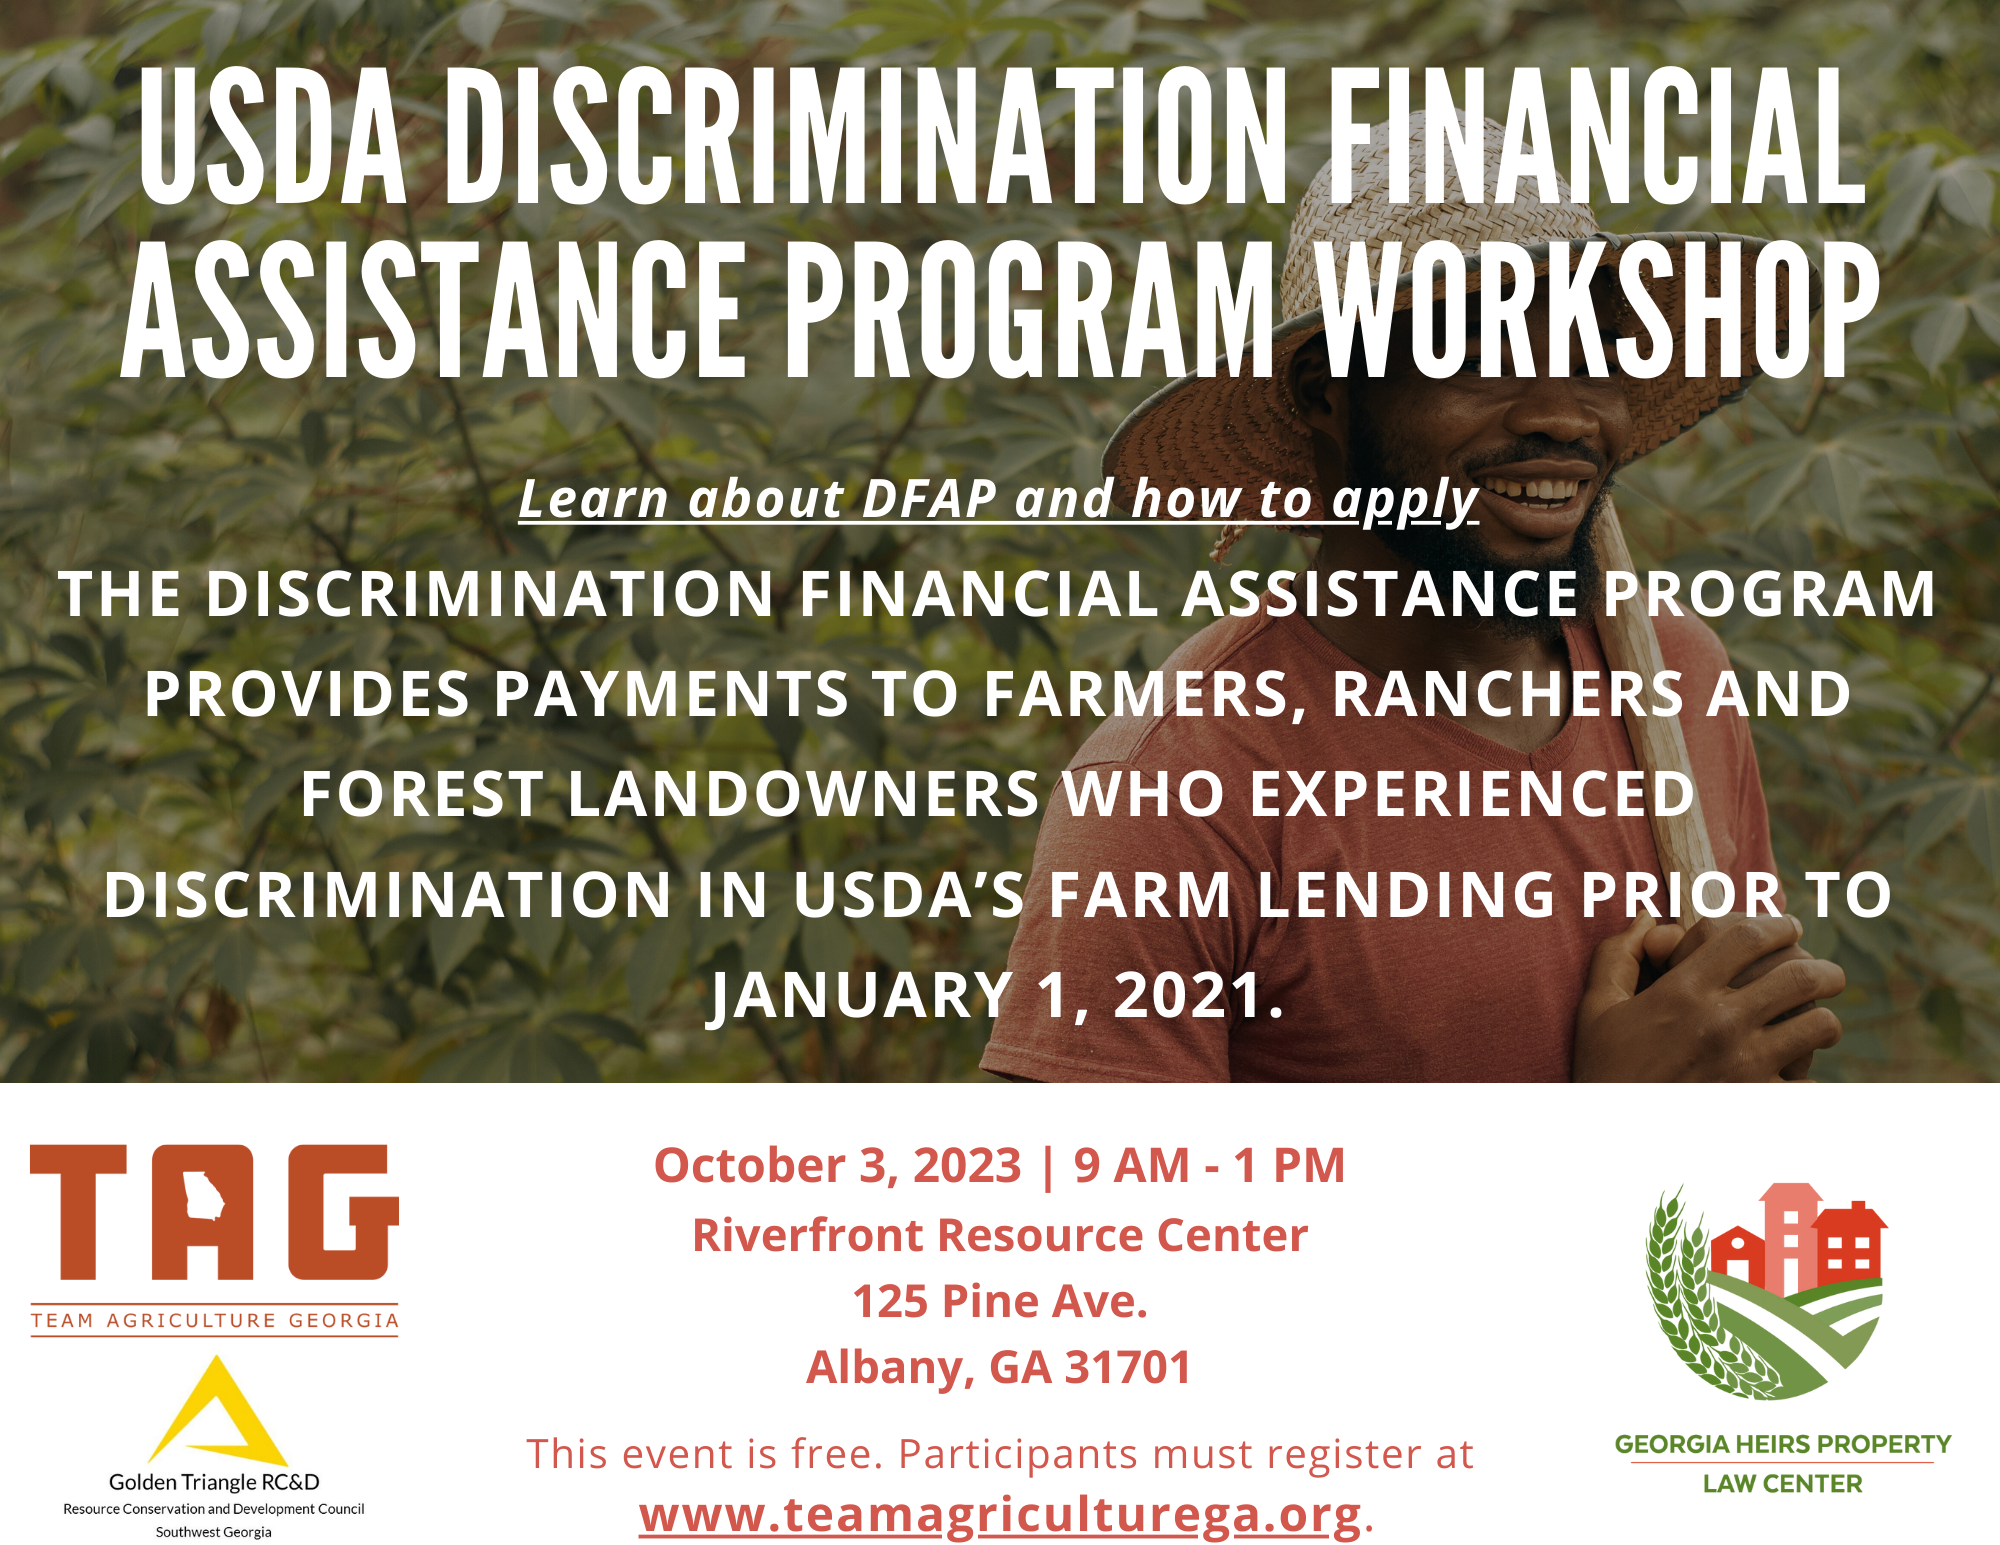 USDA Discrimination Financial Assistance Workshop —Team Agriculture Georgia (TAG)